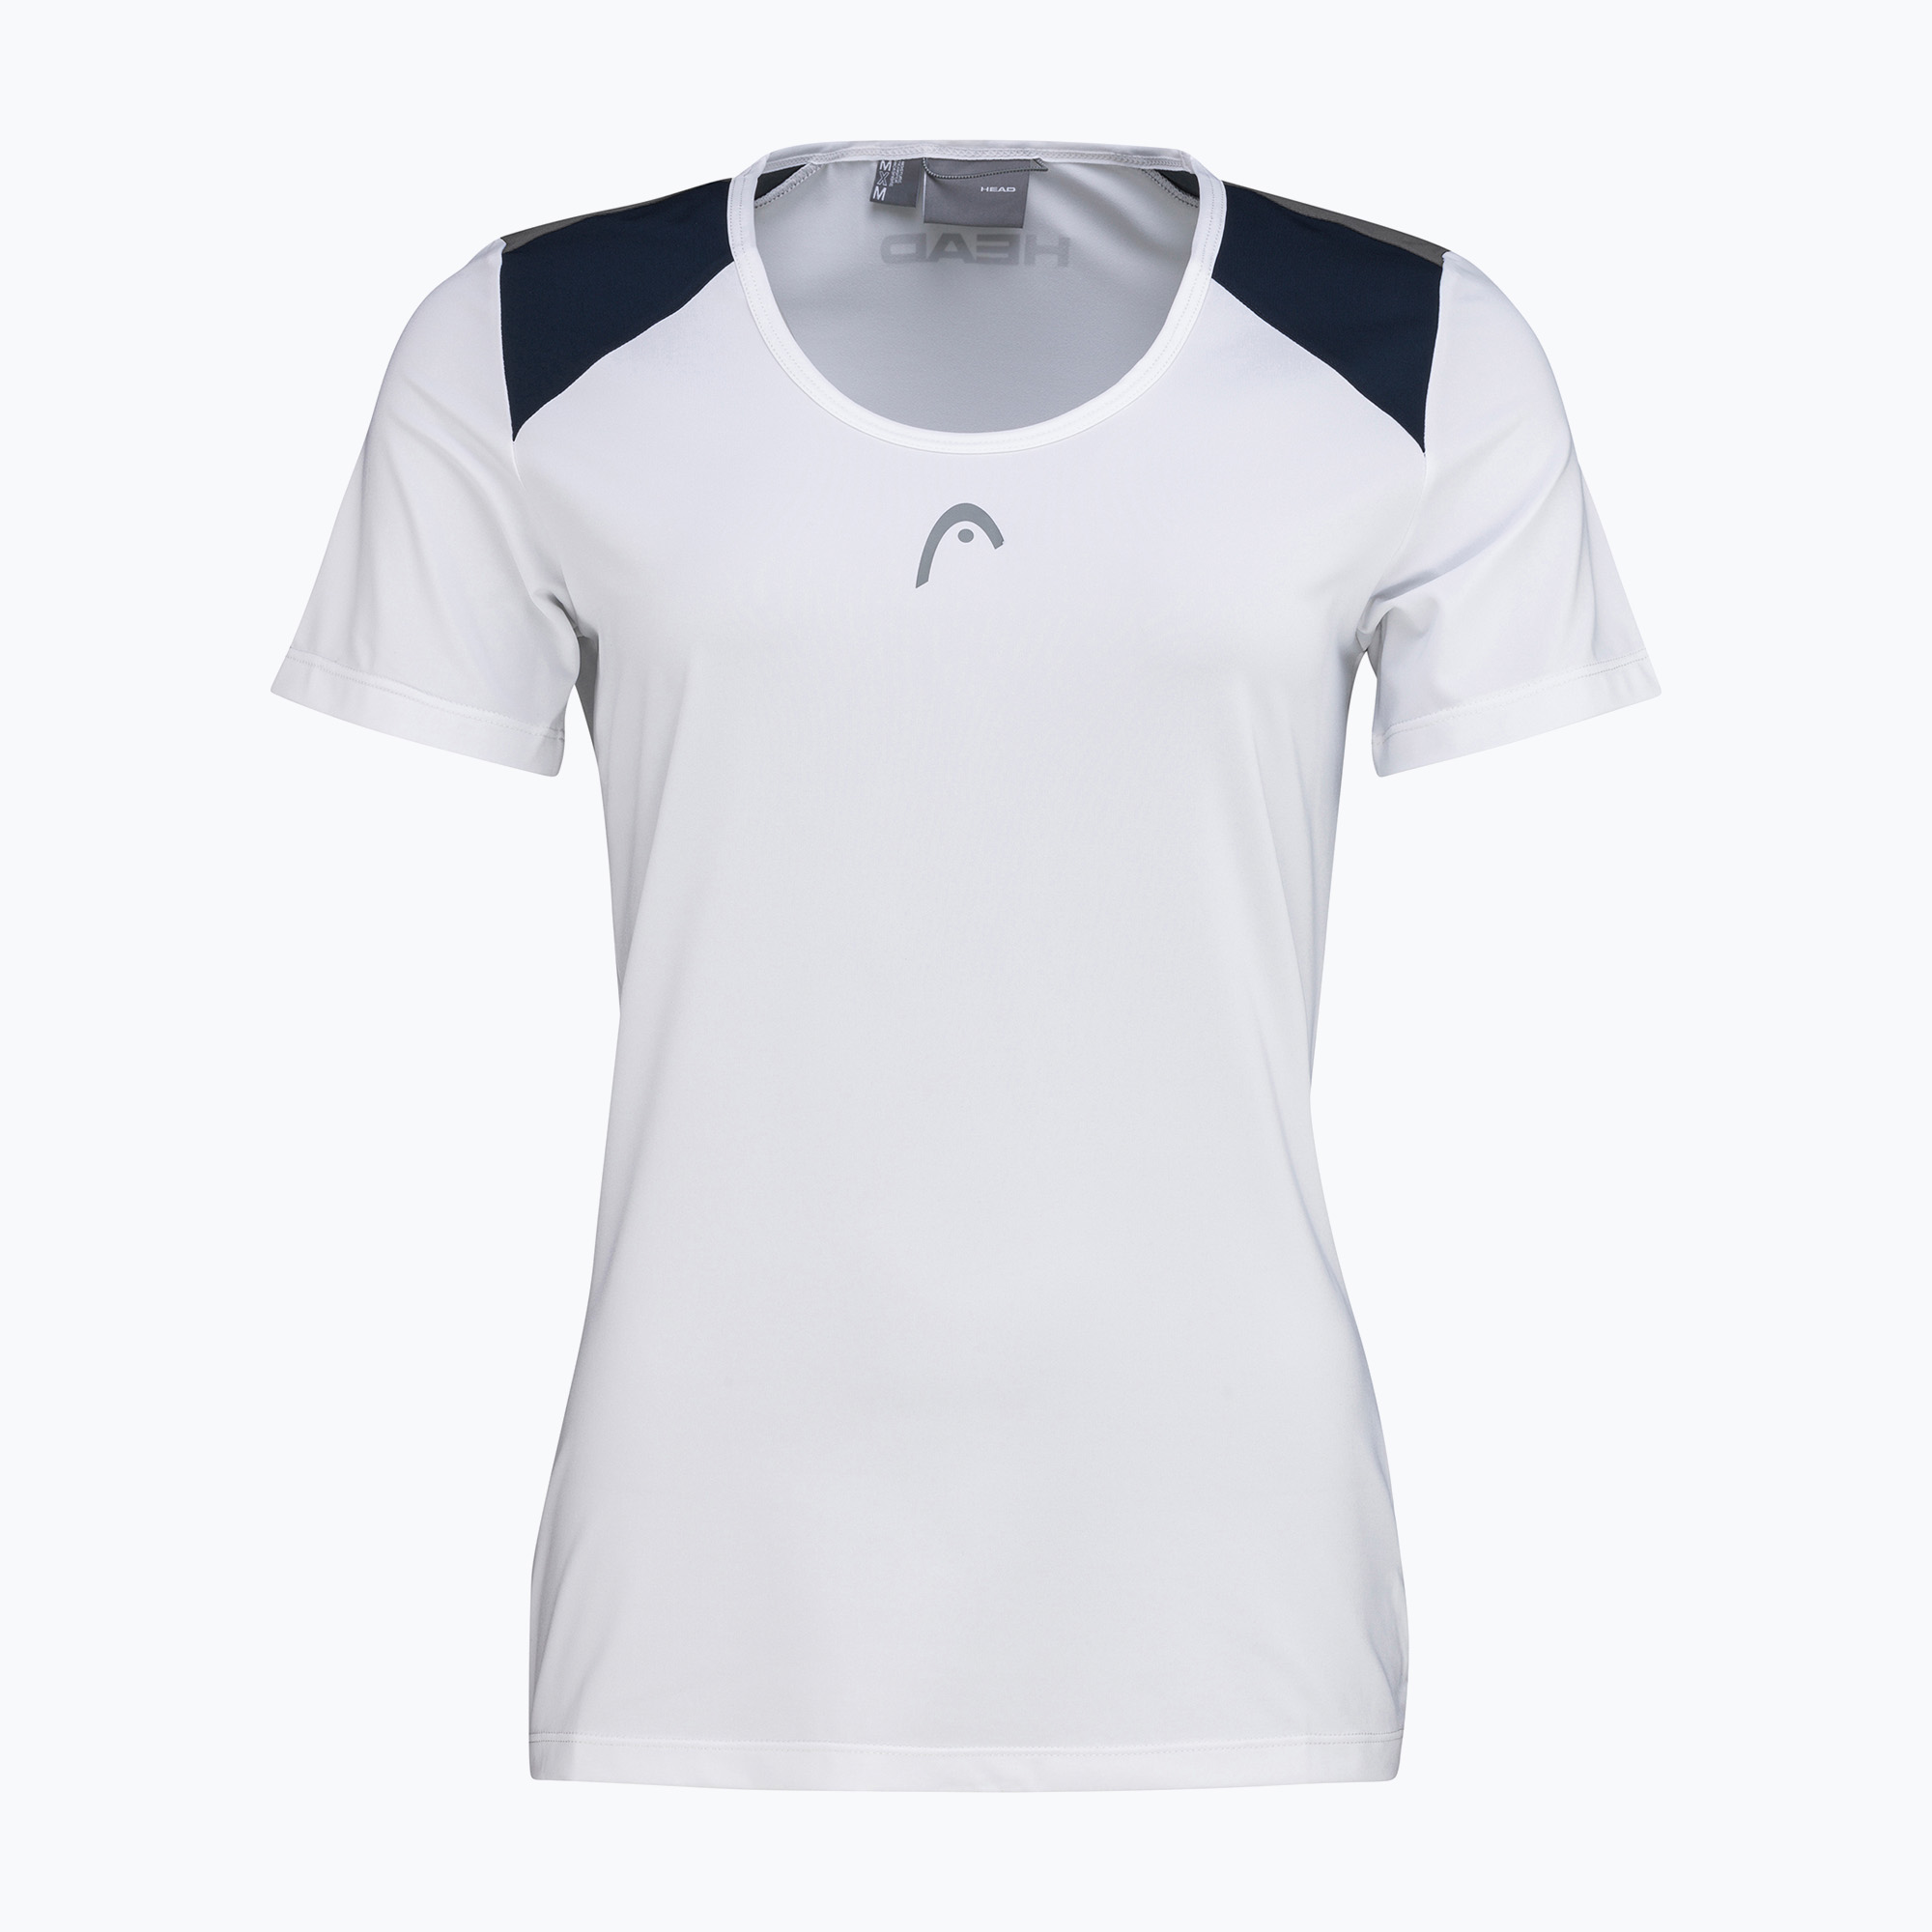 HEAD Club 22 Tech dámske tenisové tričko biele 814431